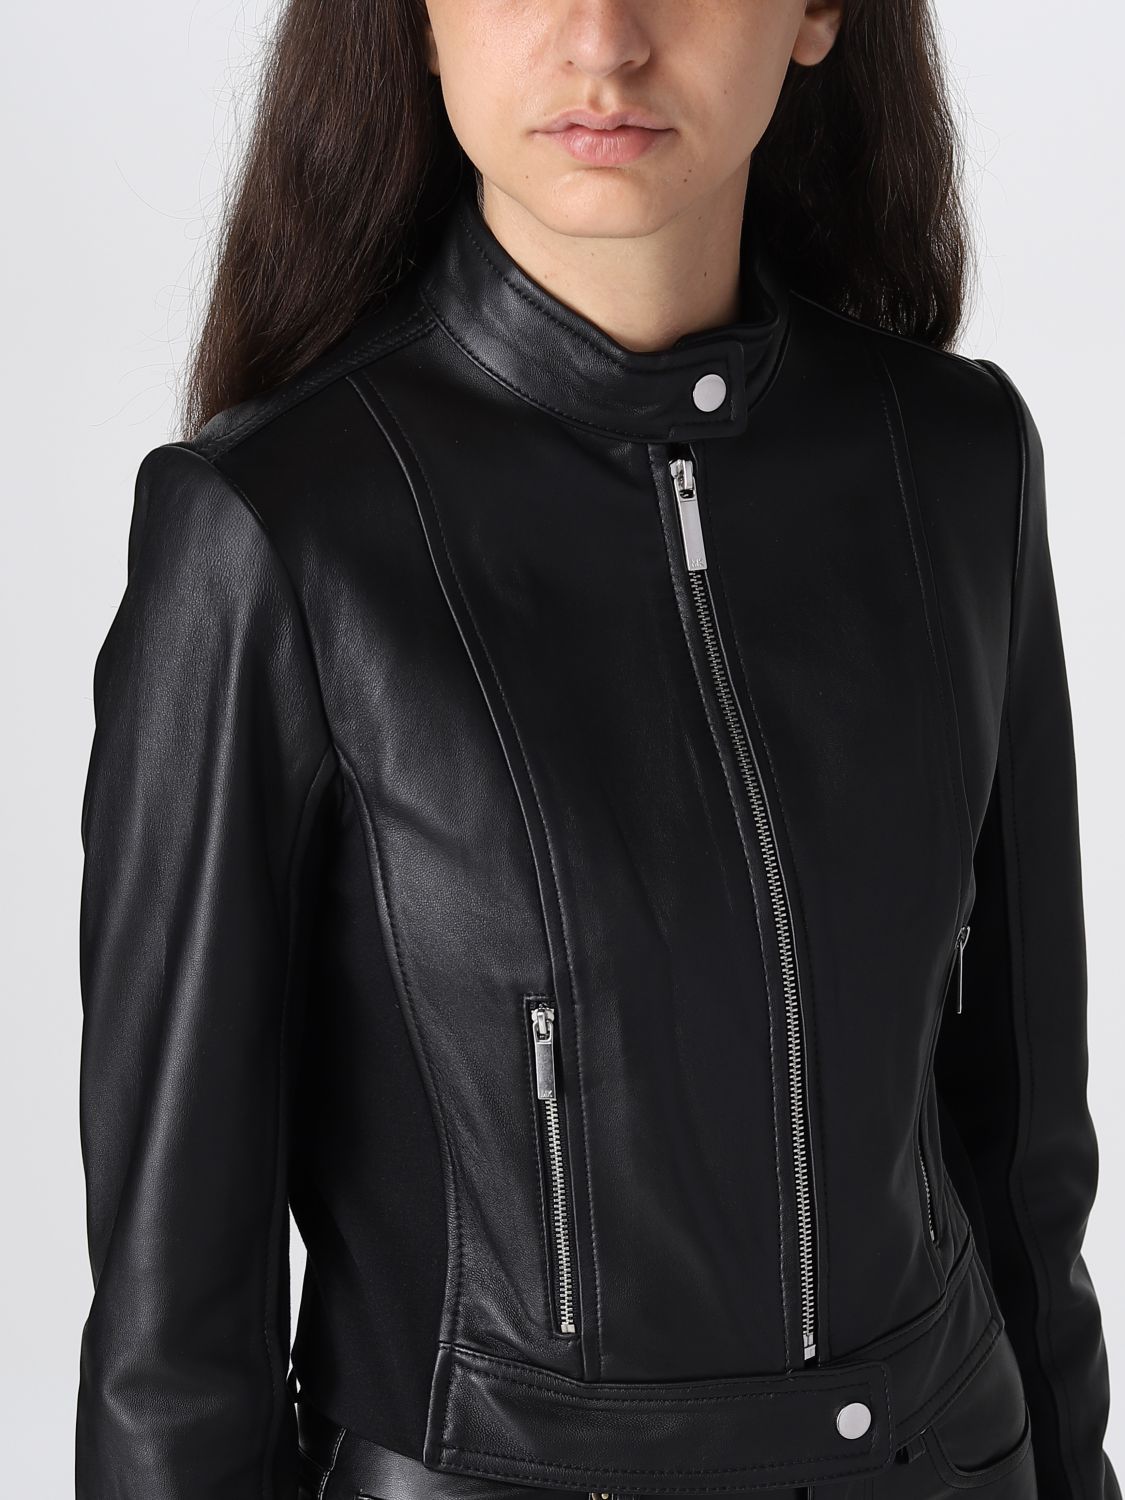 MICHAEL KORS: jacket for women - Black | Michael Kors jacket MB92J0B8RK  online on 